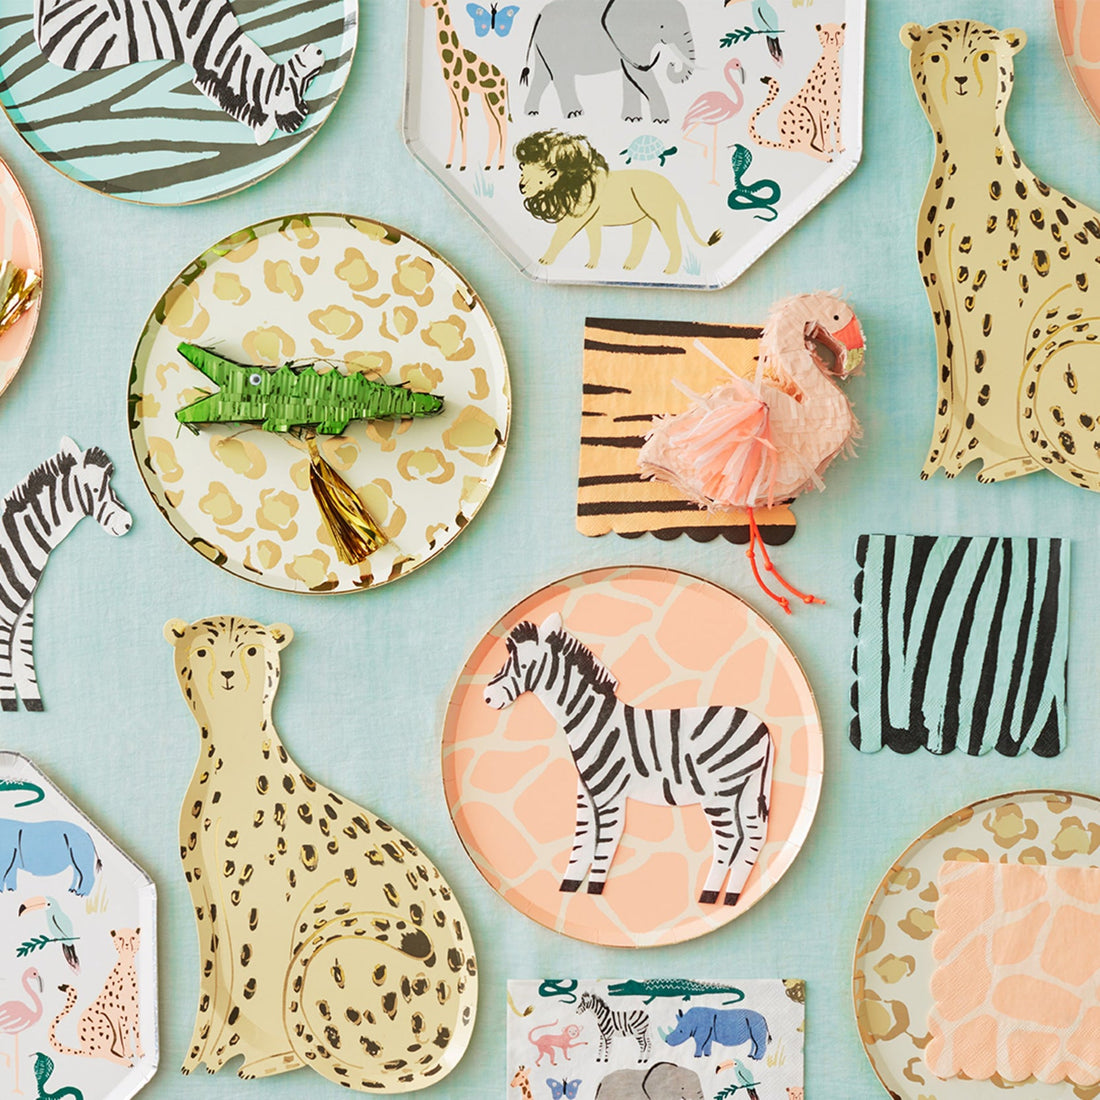 A set of four Safari Animal Print Plates by Meri Meri with a zebra animal print and gold foil detail on them.